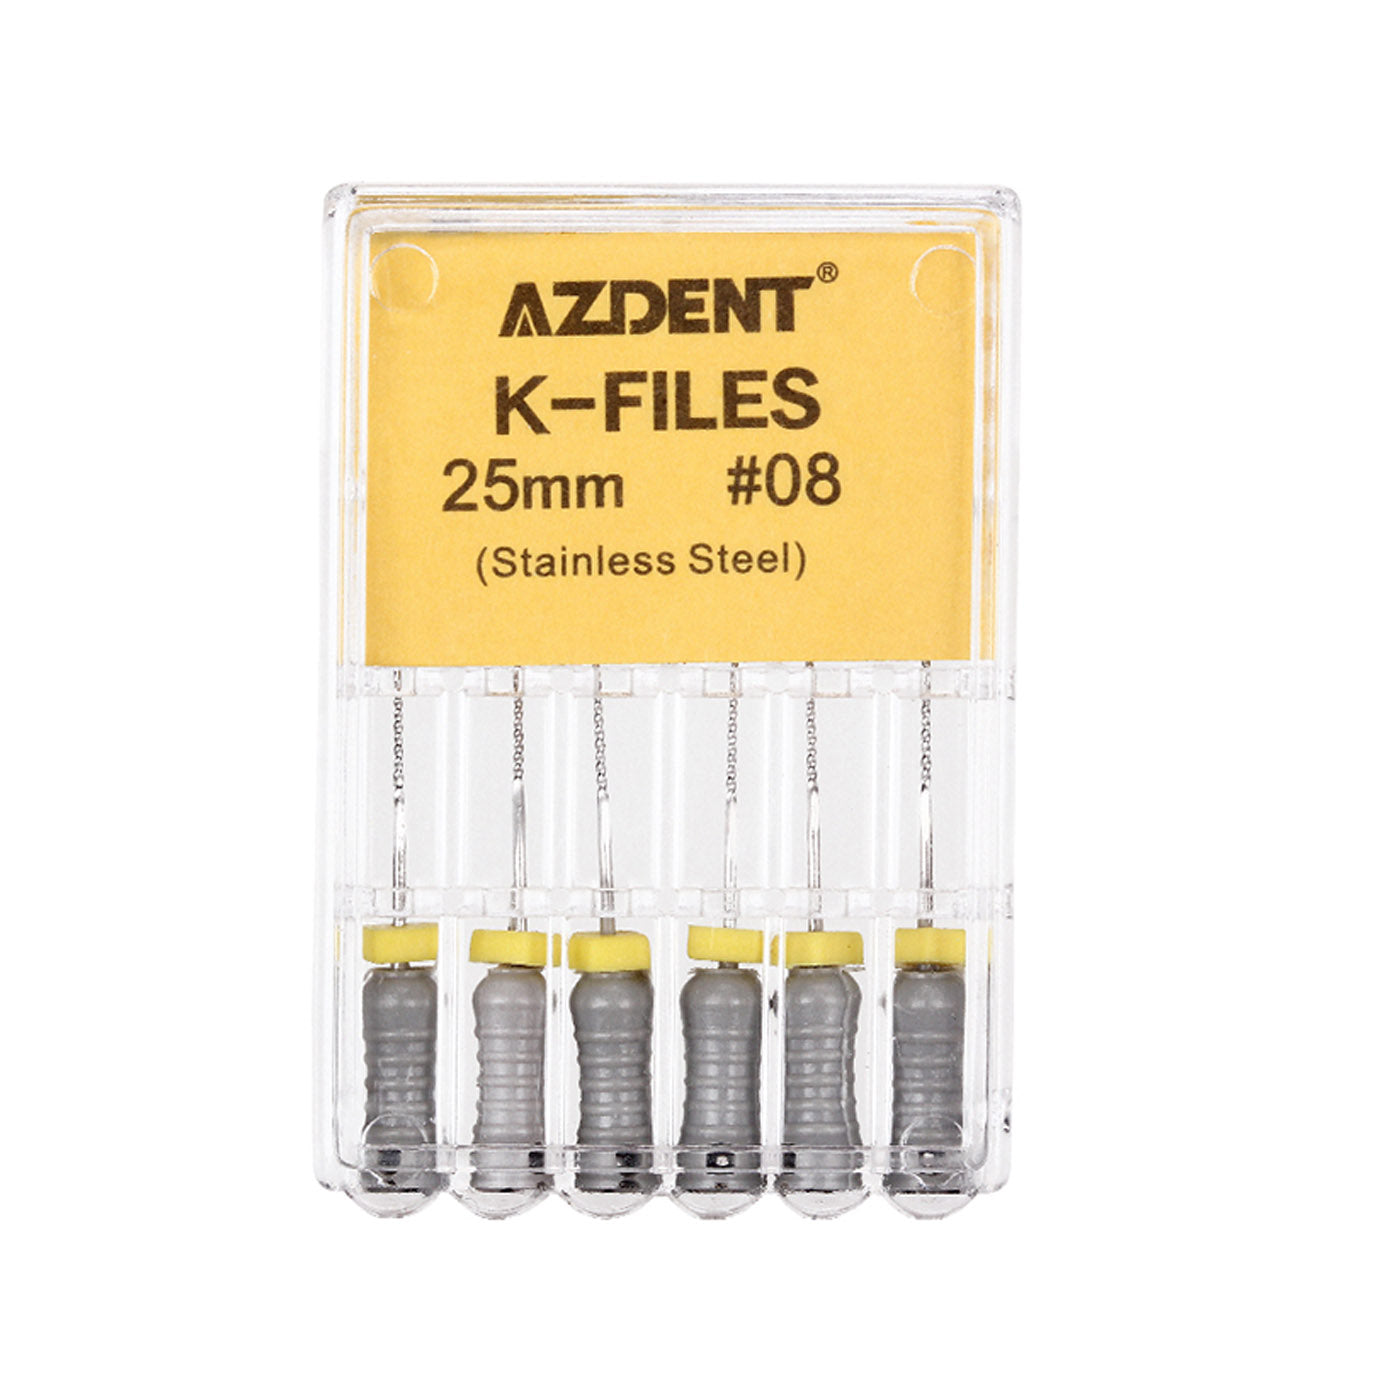 AZDENT Dental Hand K-Files Stainless Steel 25mm #08 Grey 6pcs/Box-azdentall.com